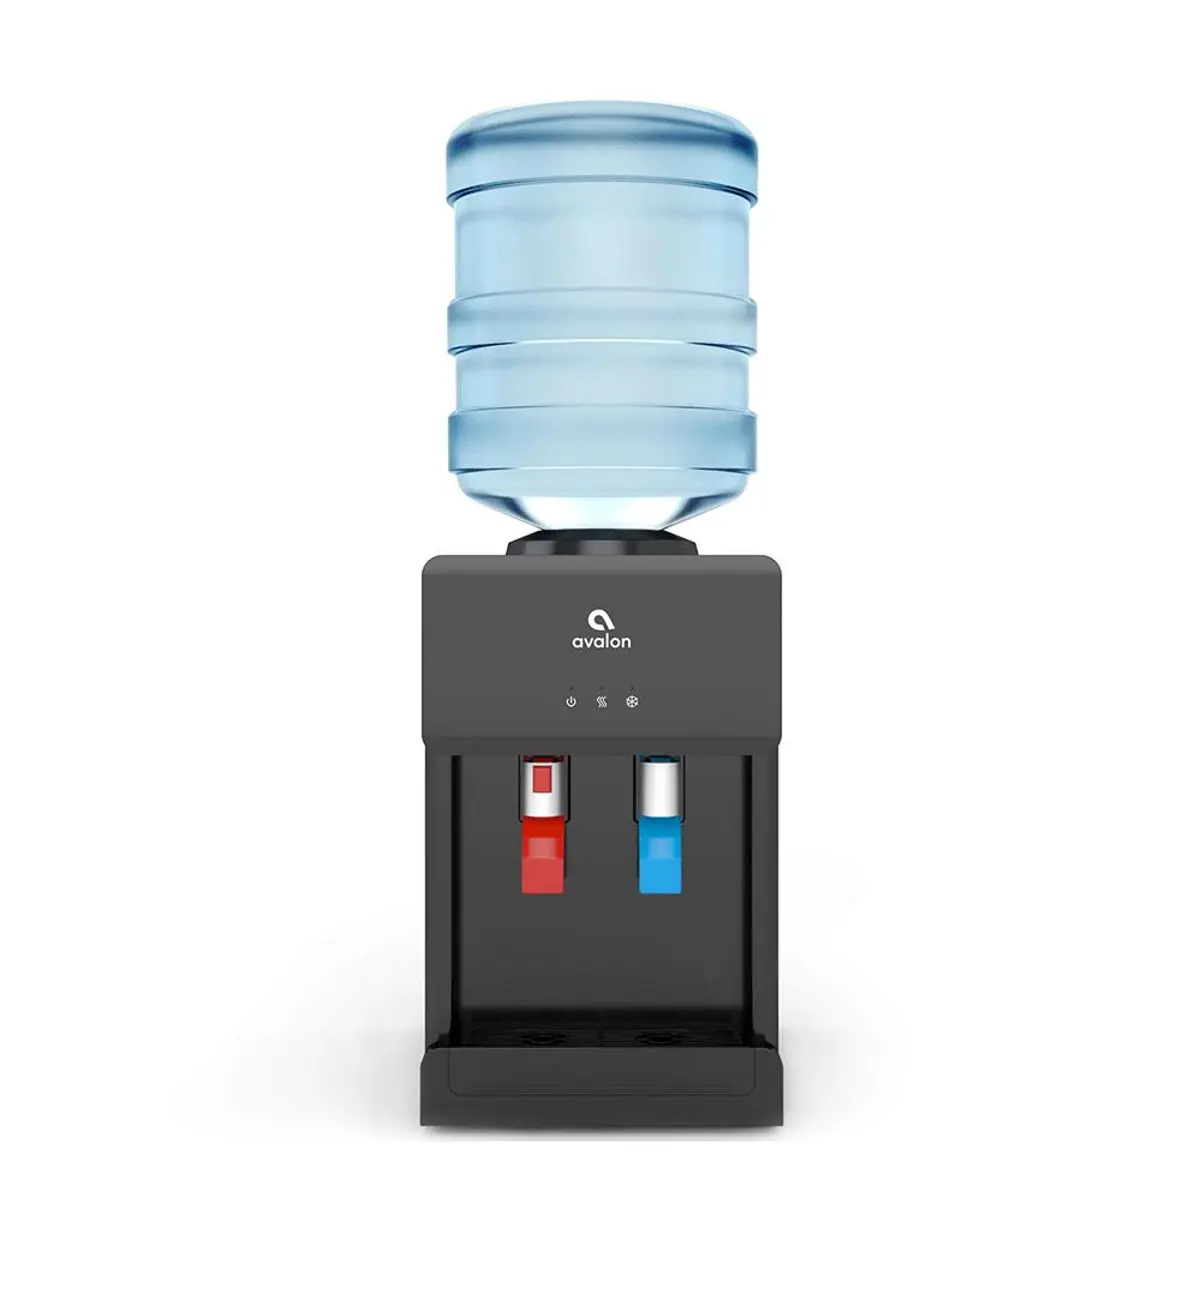 Avalon Premium Countertop Water Cooler review